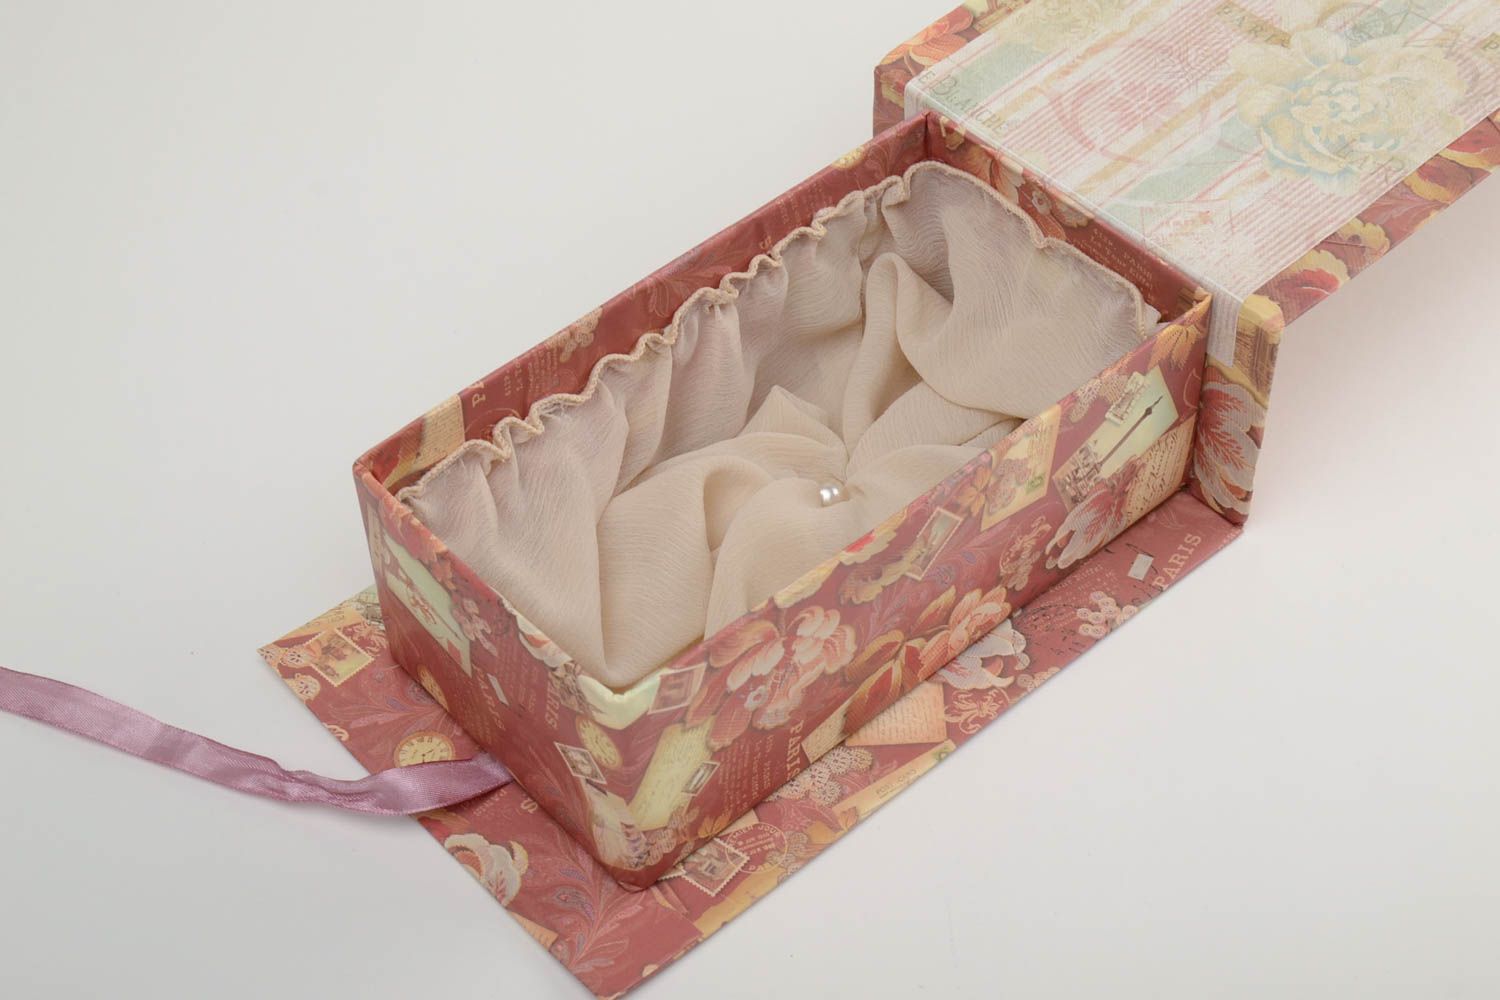 Декоративная коробка для подарка с лентами и тканью внутри красивая хэнд мейд фото 4